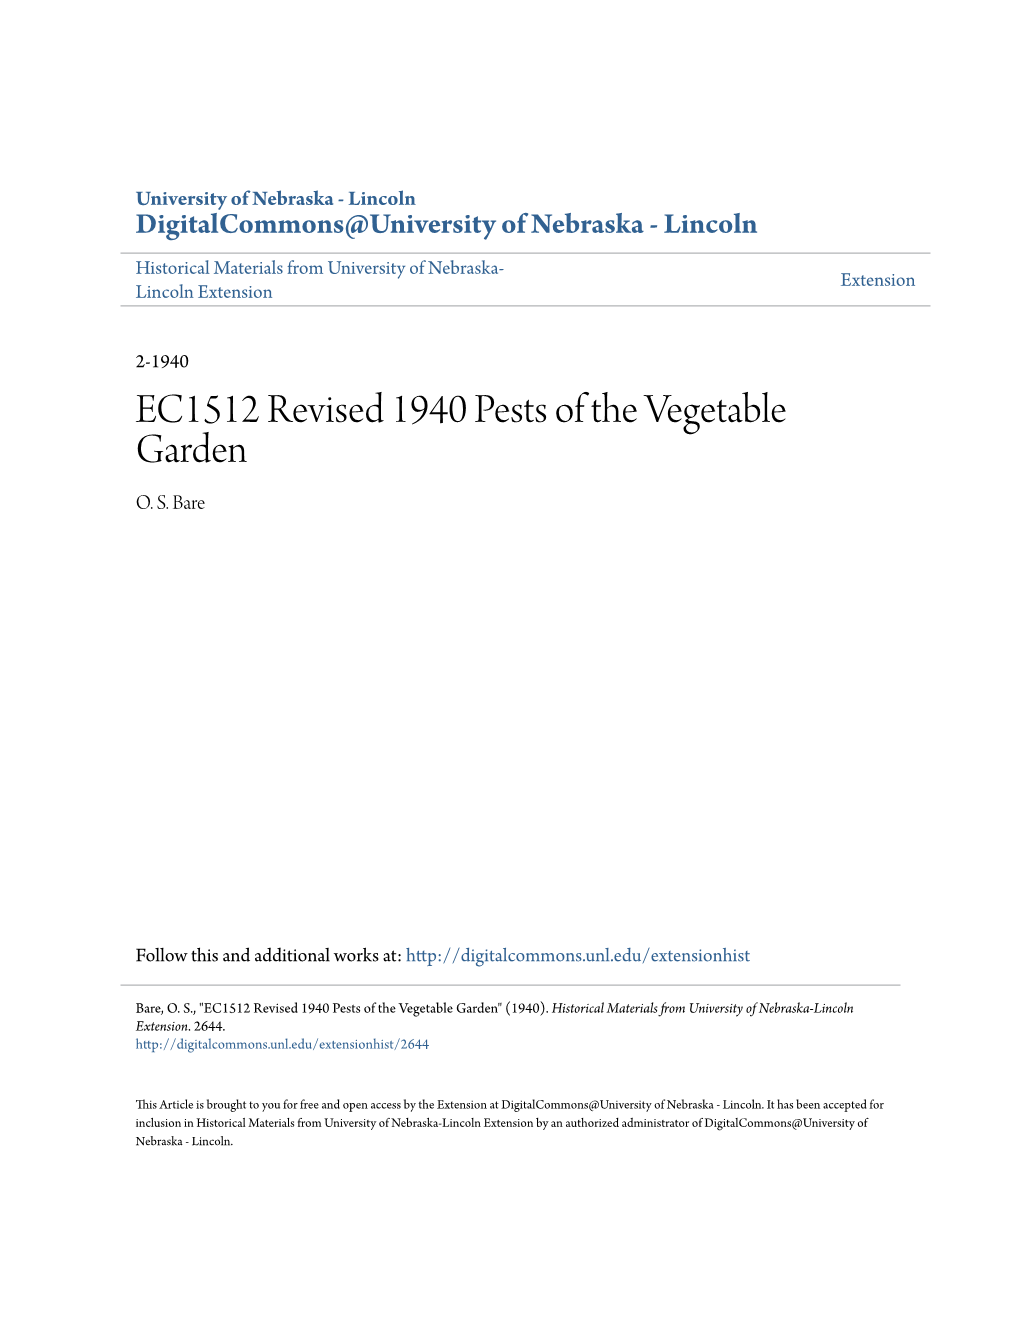 EC1512 Revised 1940 Pests of the Vegetable Garden O